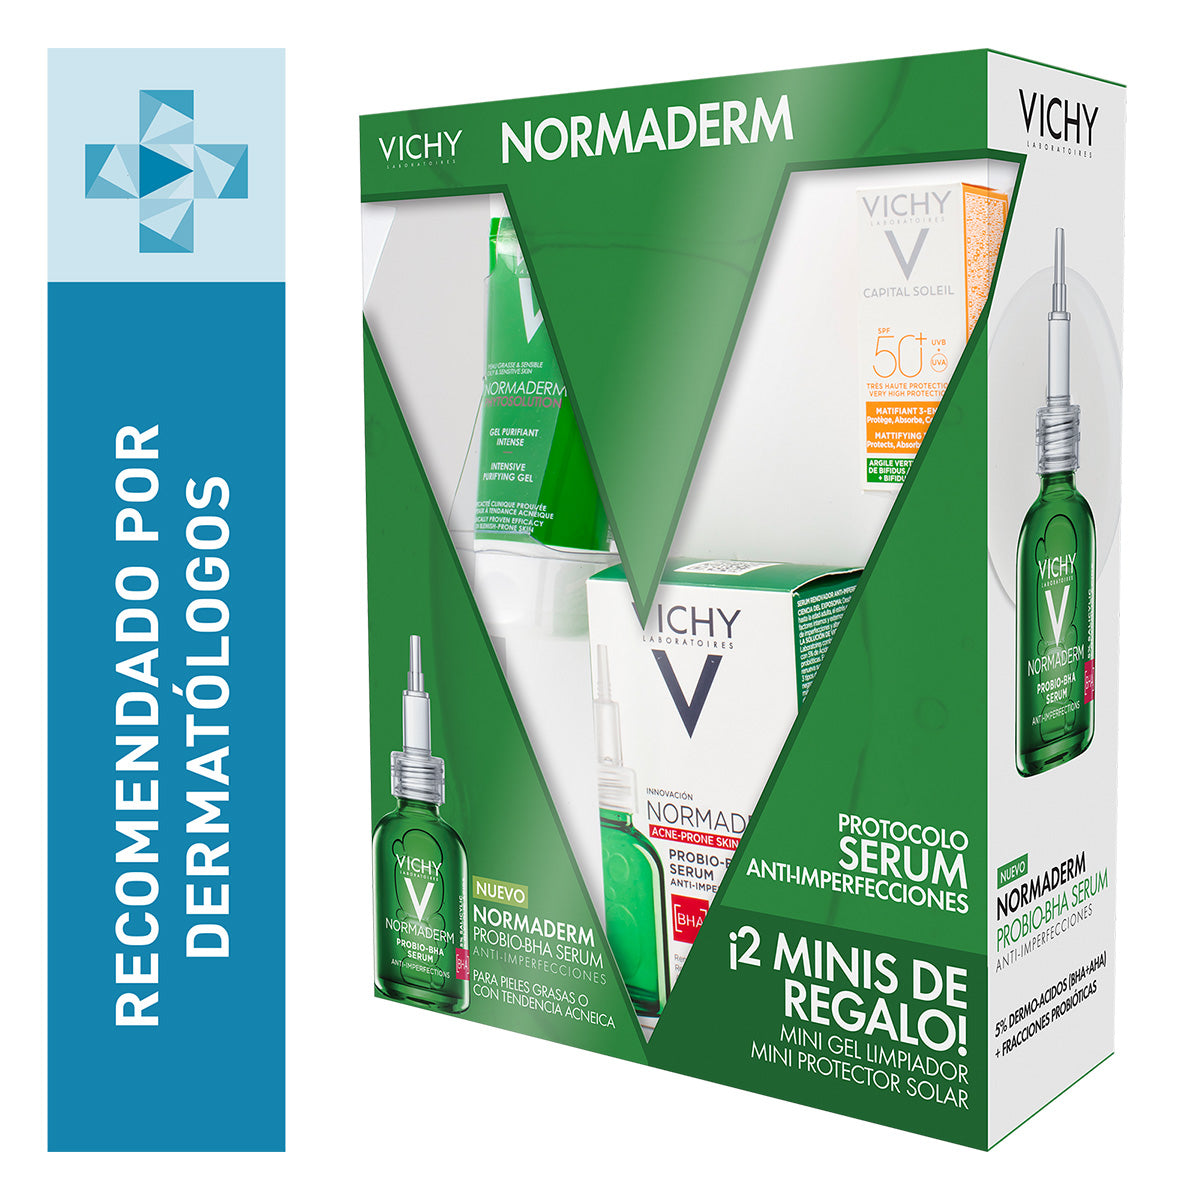 Normaderm serum probio BHA 30ml + Gel limpiador purificante phytosolutions 50ml+ Capital soleil matificante 3 en 1 3ml.